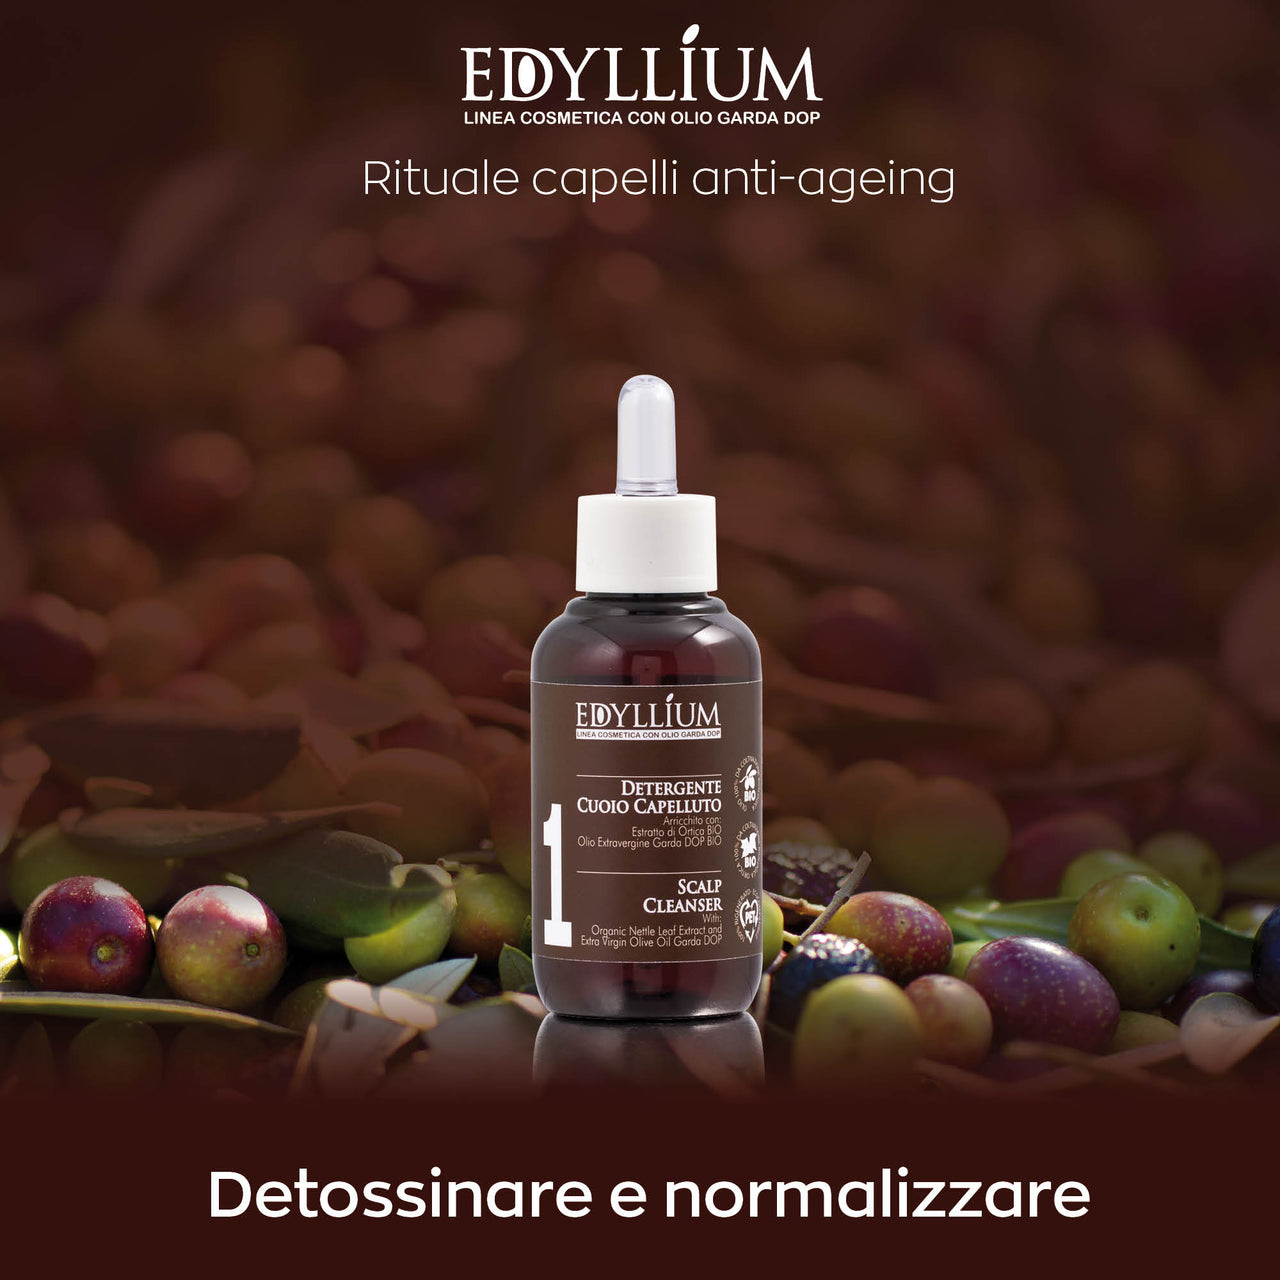 Edyllium Detergente Purificante Cuoio Capelluto - Scalp cleanser - 100 ml